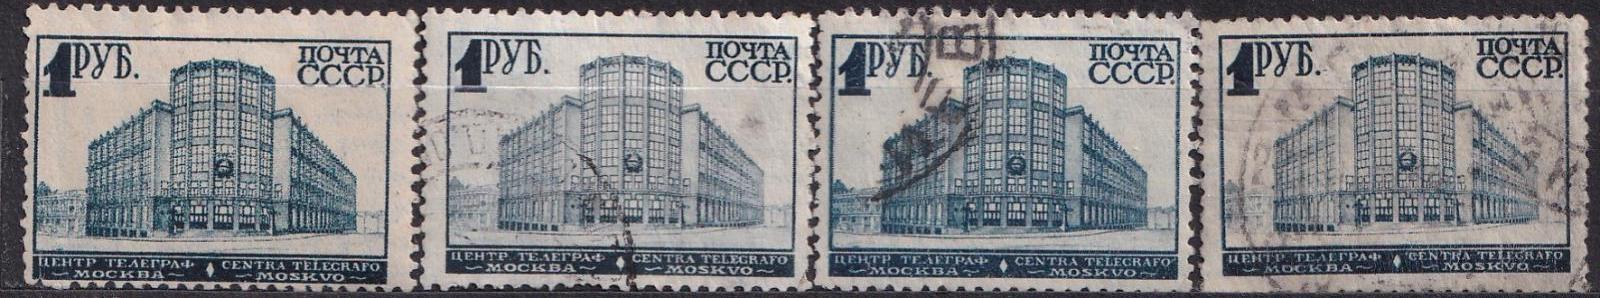 SSSR-CCCP 382 Veletrh 1930, ražené různé barvy, papír